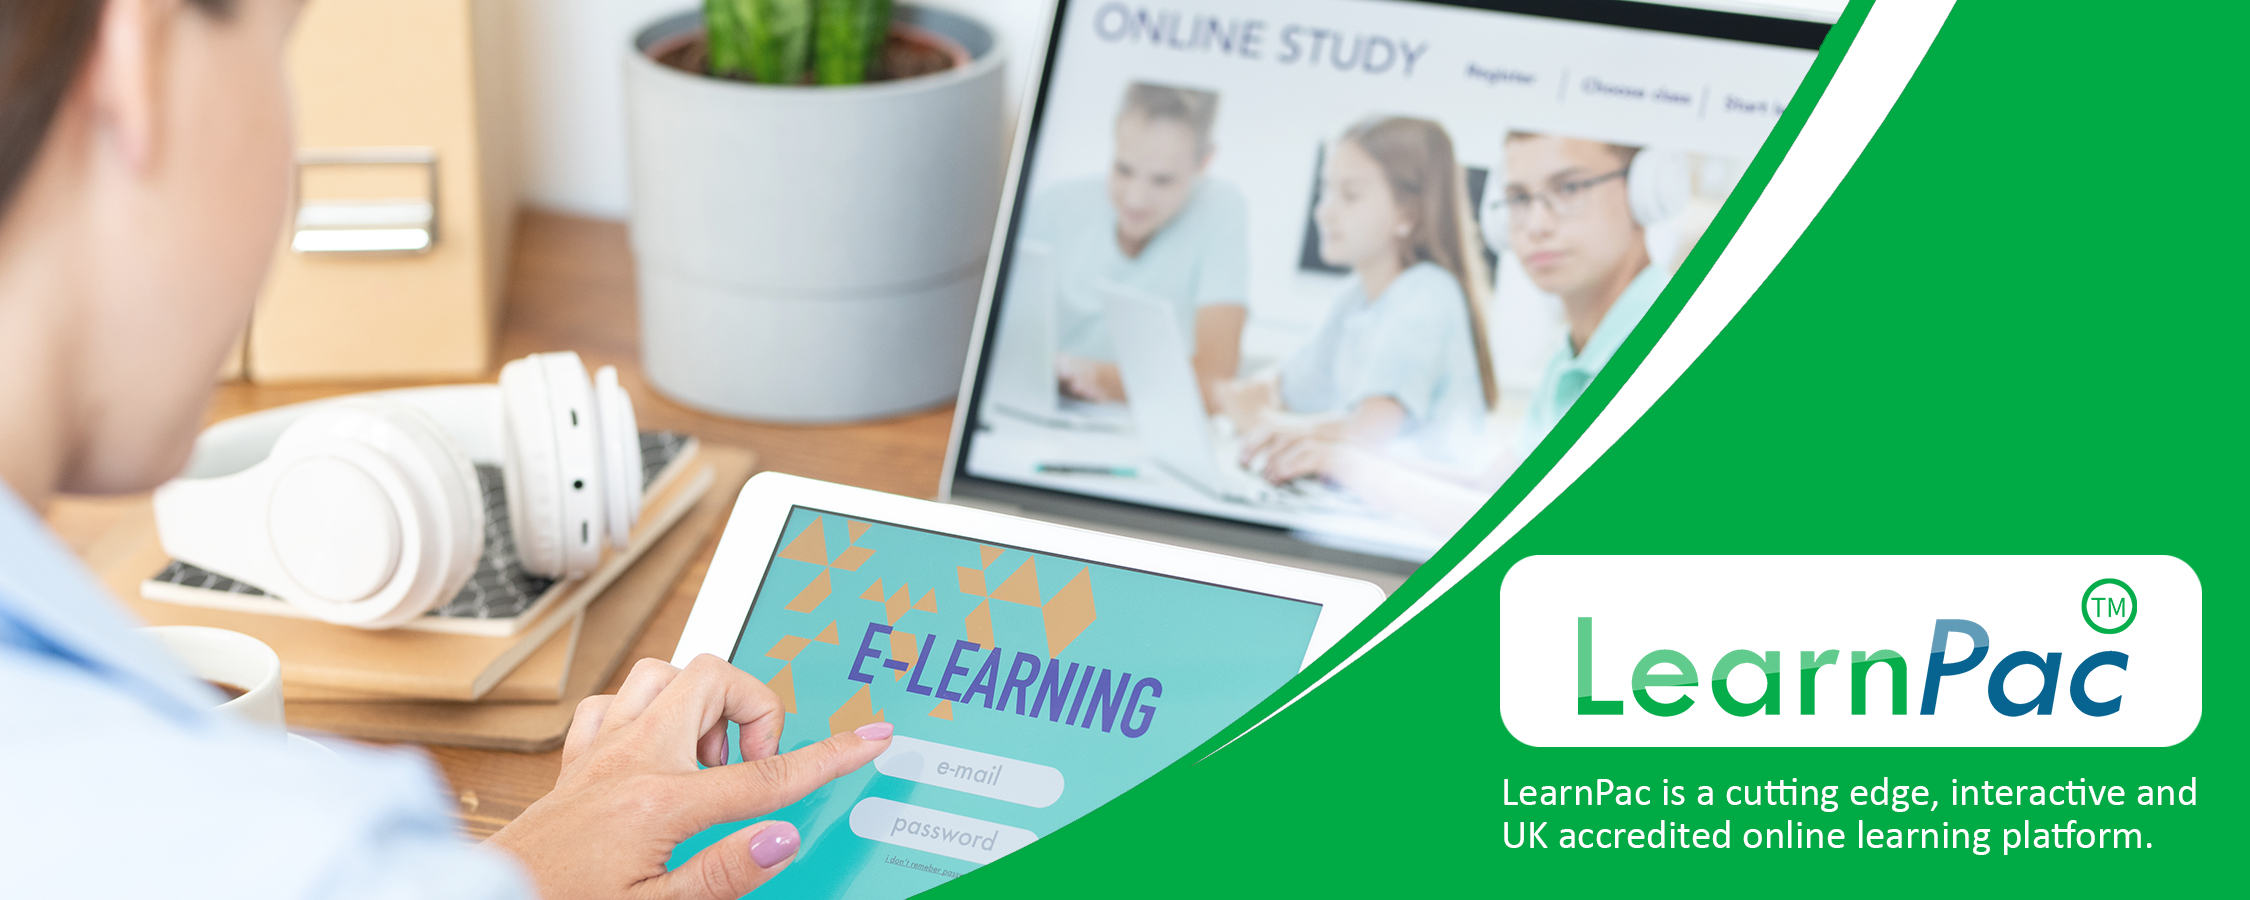 Telephone Etiquette Training - Online Learning Courses - E-Learning Courses - LearnPac Systems UK -